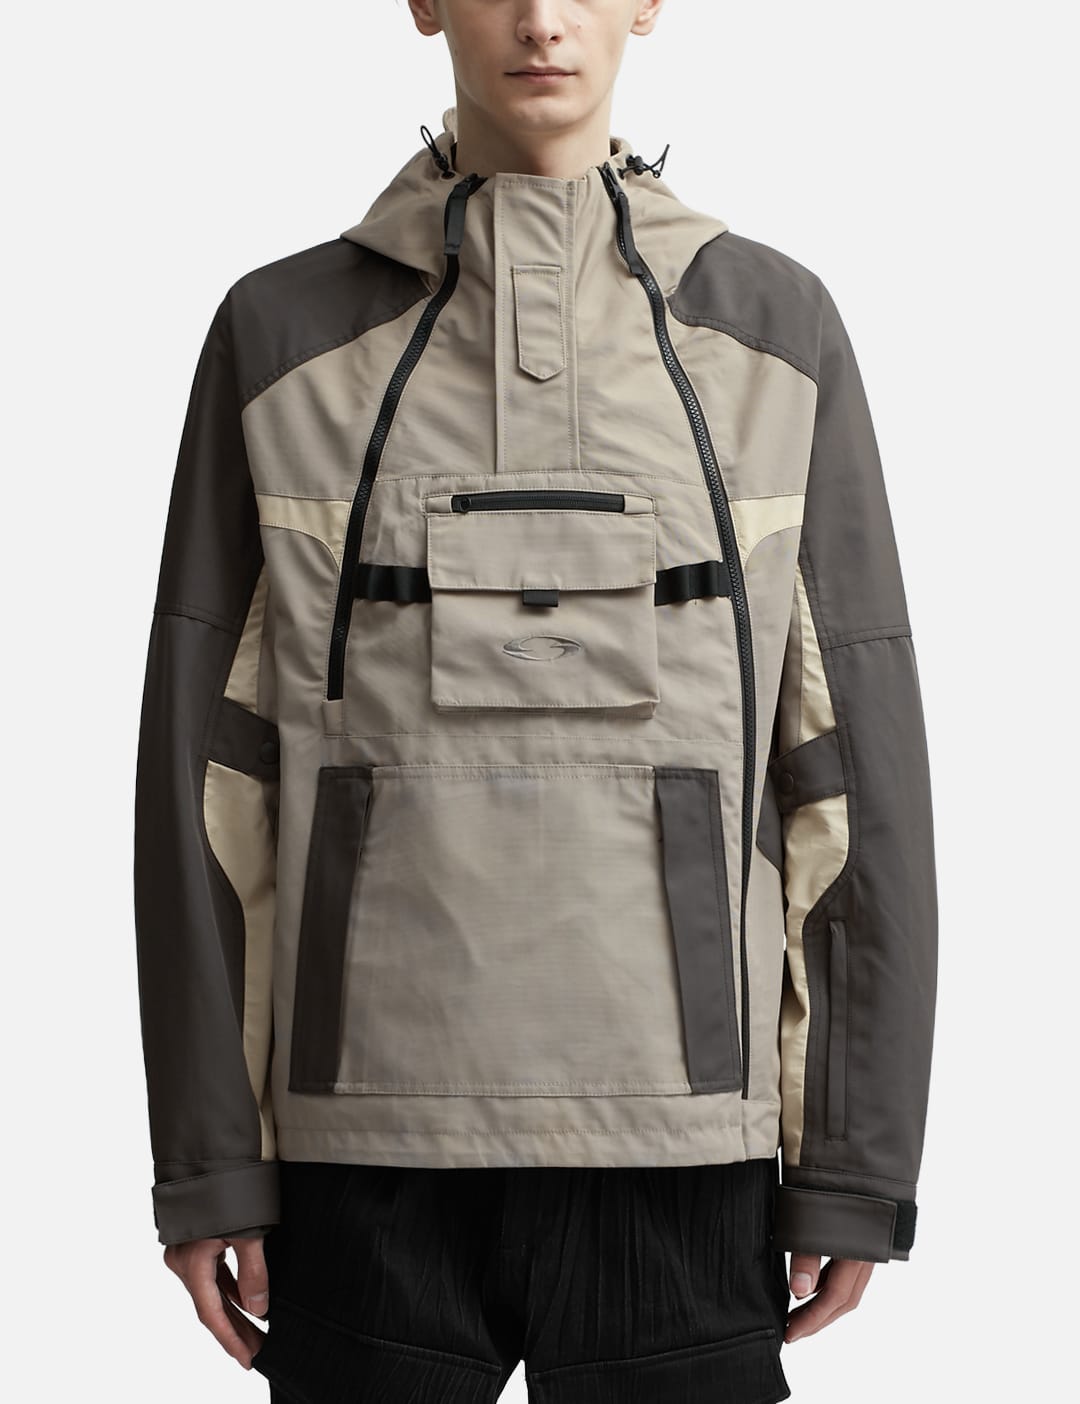 GRAILZ   Technical Shell Jacket   HBX   Globally Curated Fashion